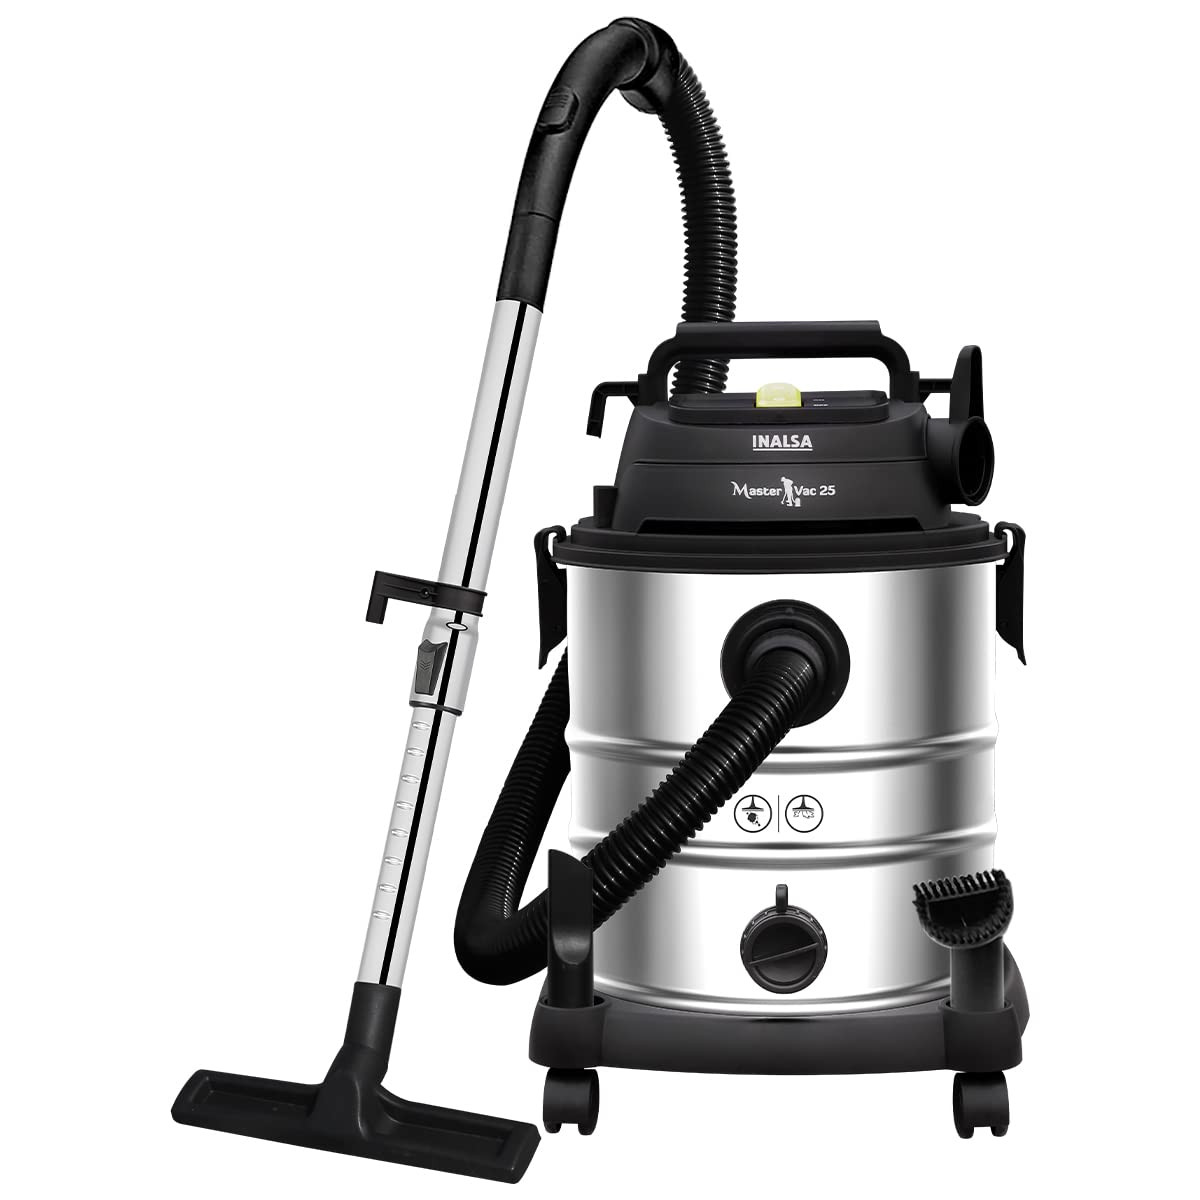 AGARO Regal 800 Watts Handheld Vacuum CleanerFor Home UseDry Vacuuming65 Kpa Suction